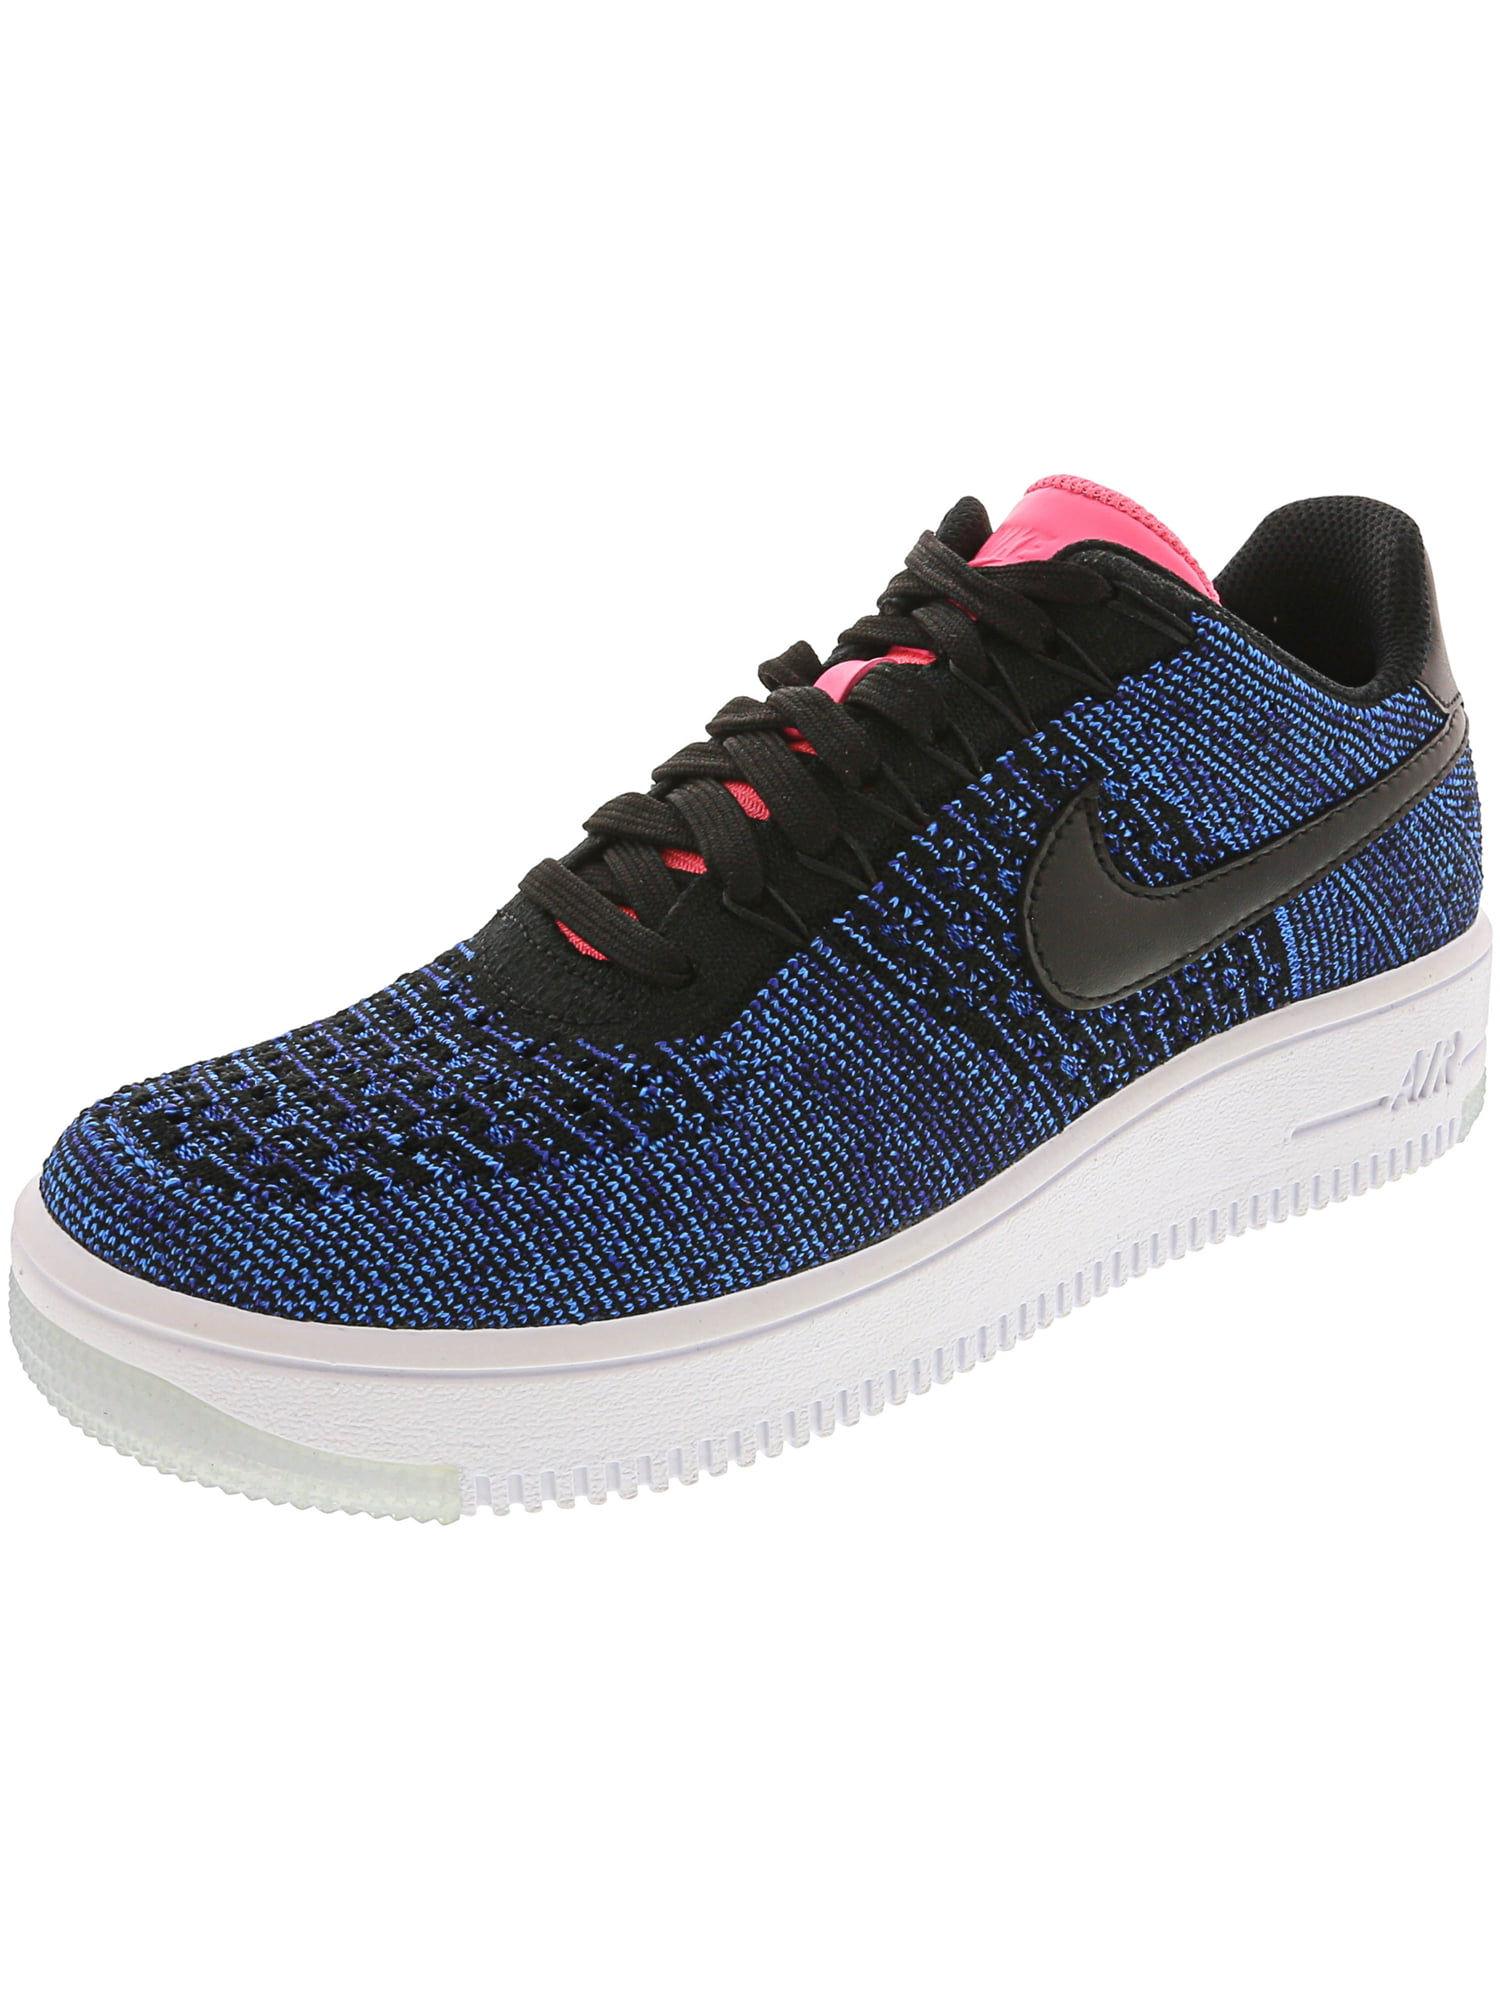 Nike Air Force 1 Flyknit Low Women's Shoes Black/Royal-Black/Digital Pink  820256-003 (8 B(M) US)